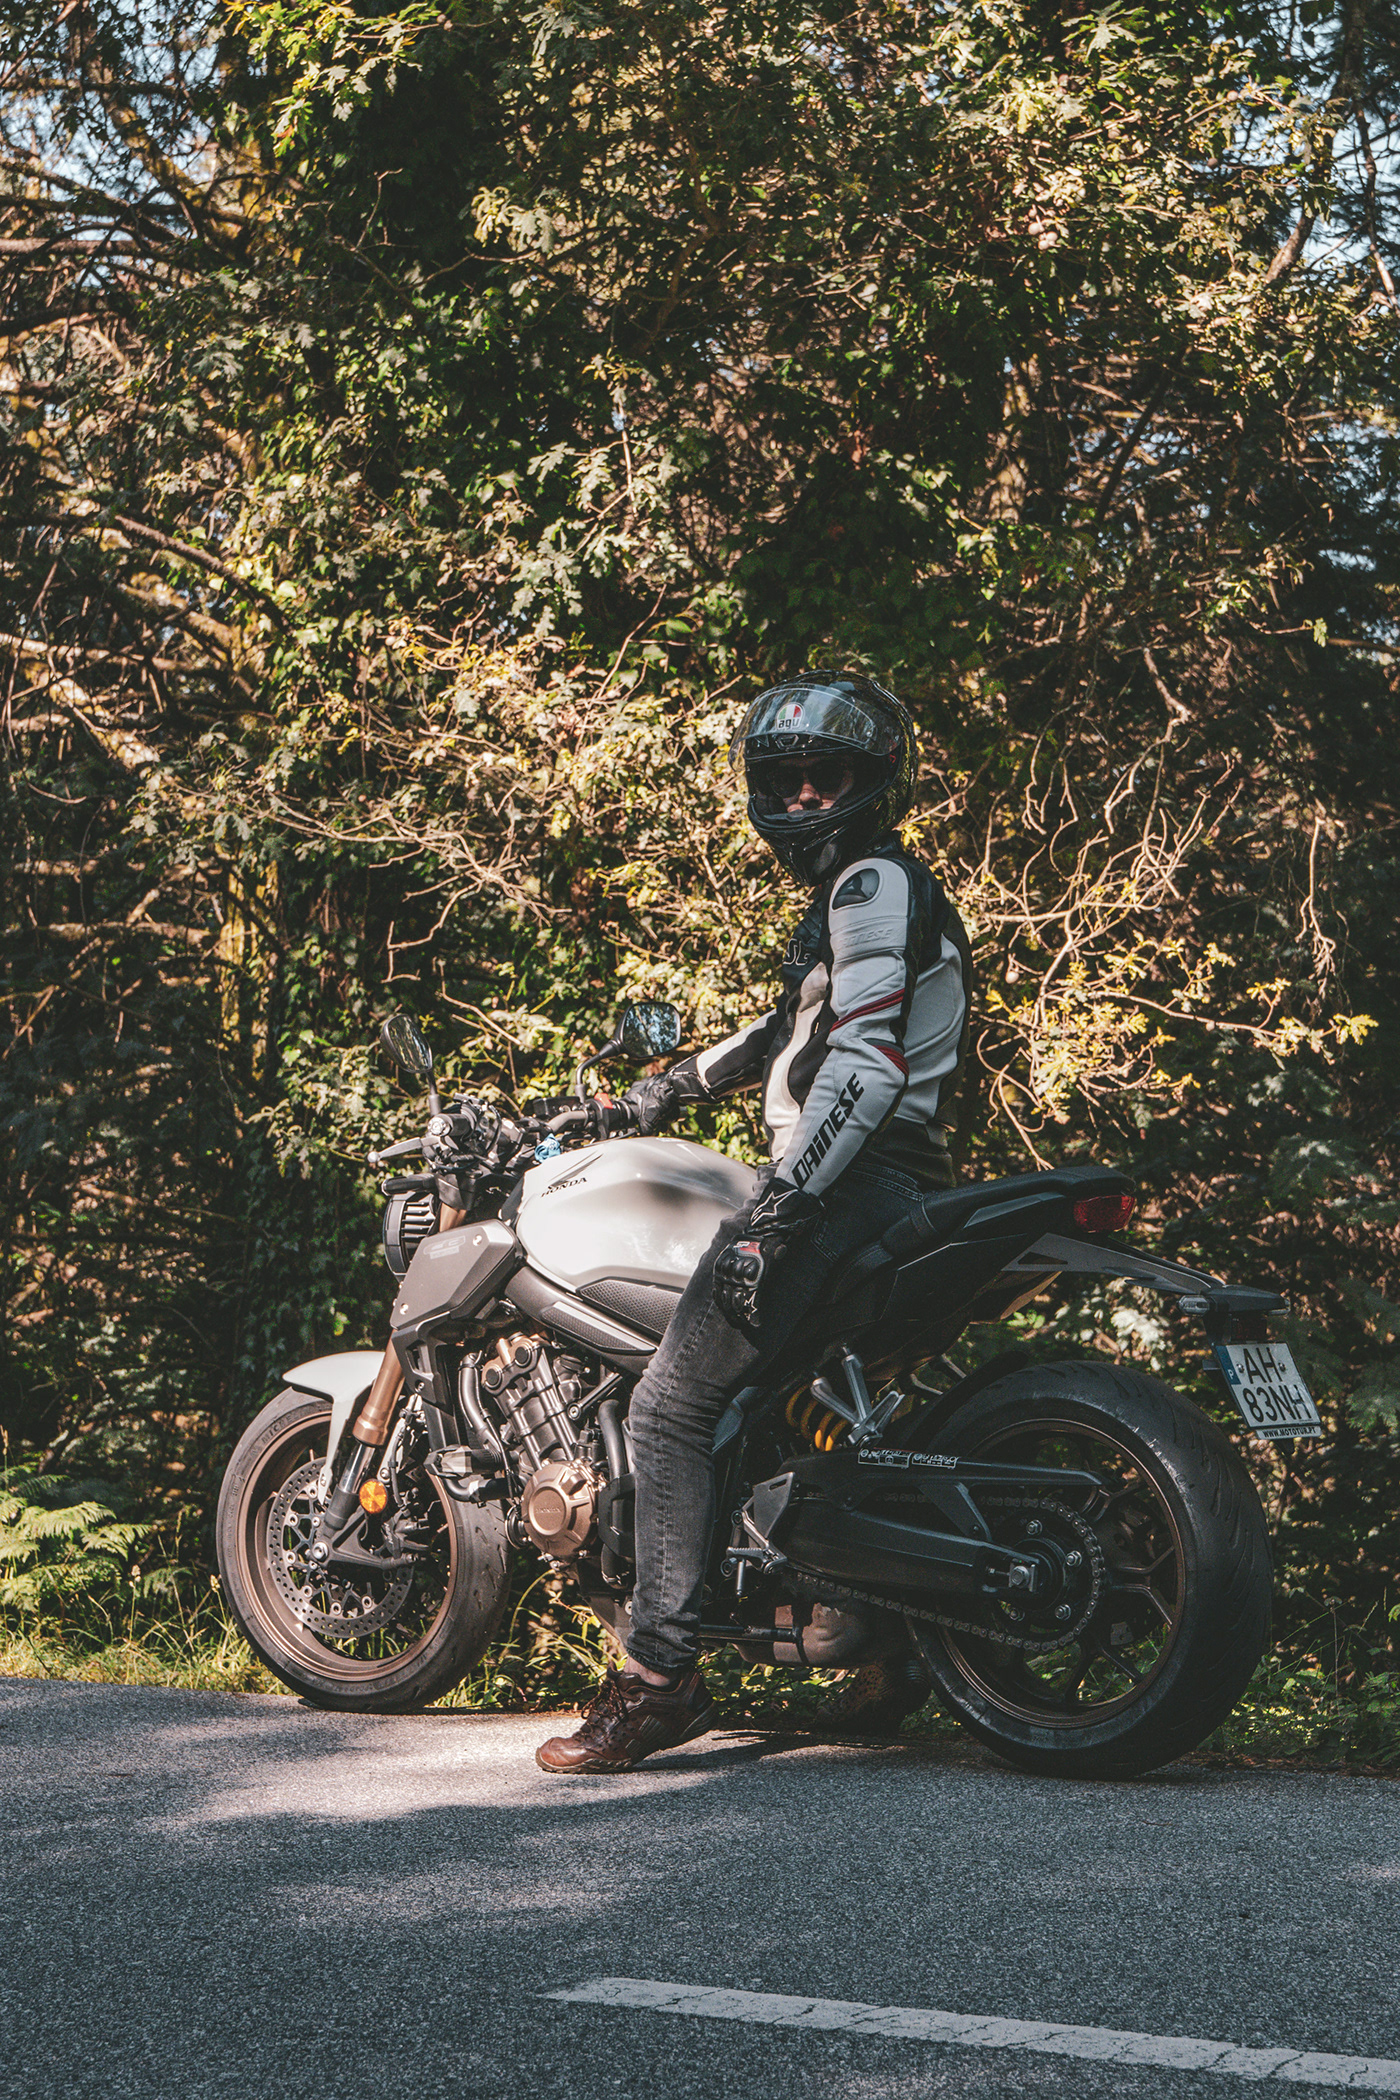 MOTORCYCLEPHOTO #motorcyclephotography #bikeride #bikelife #cb650rphoto #honda #hondacb650r #hondamotorcycle #hondaphotography